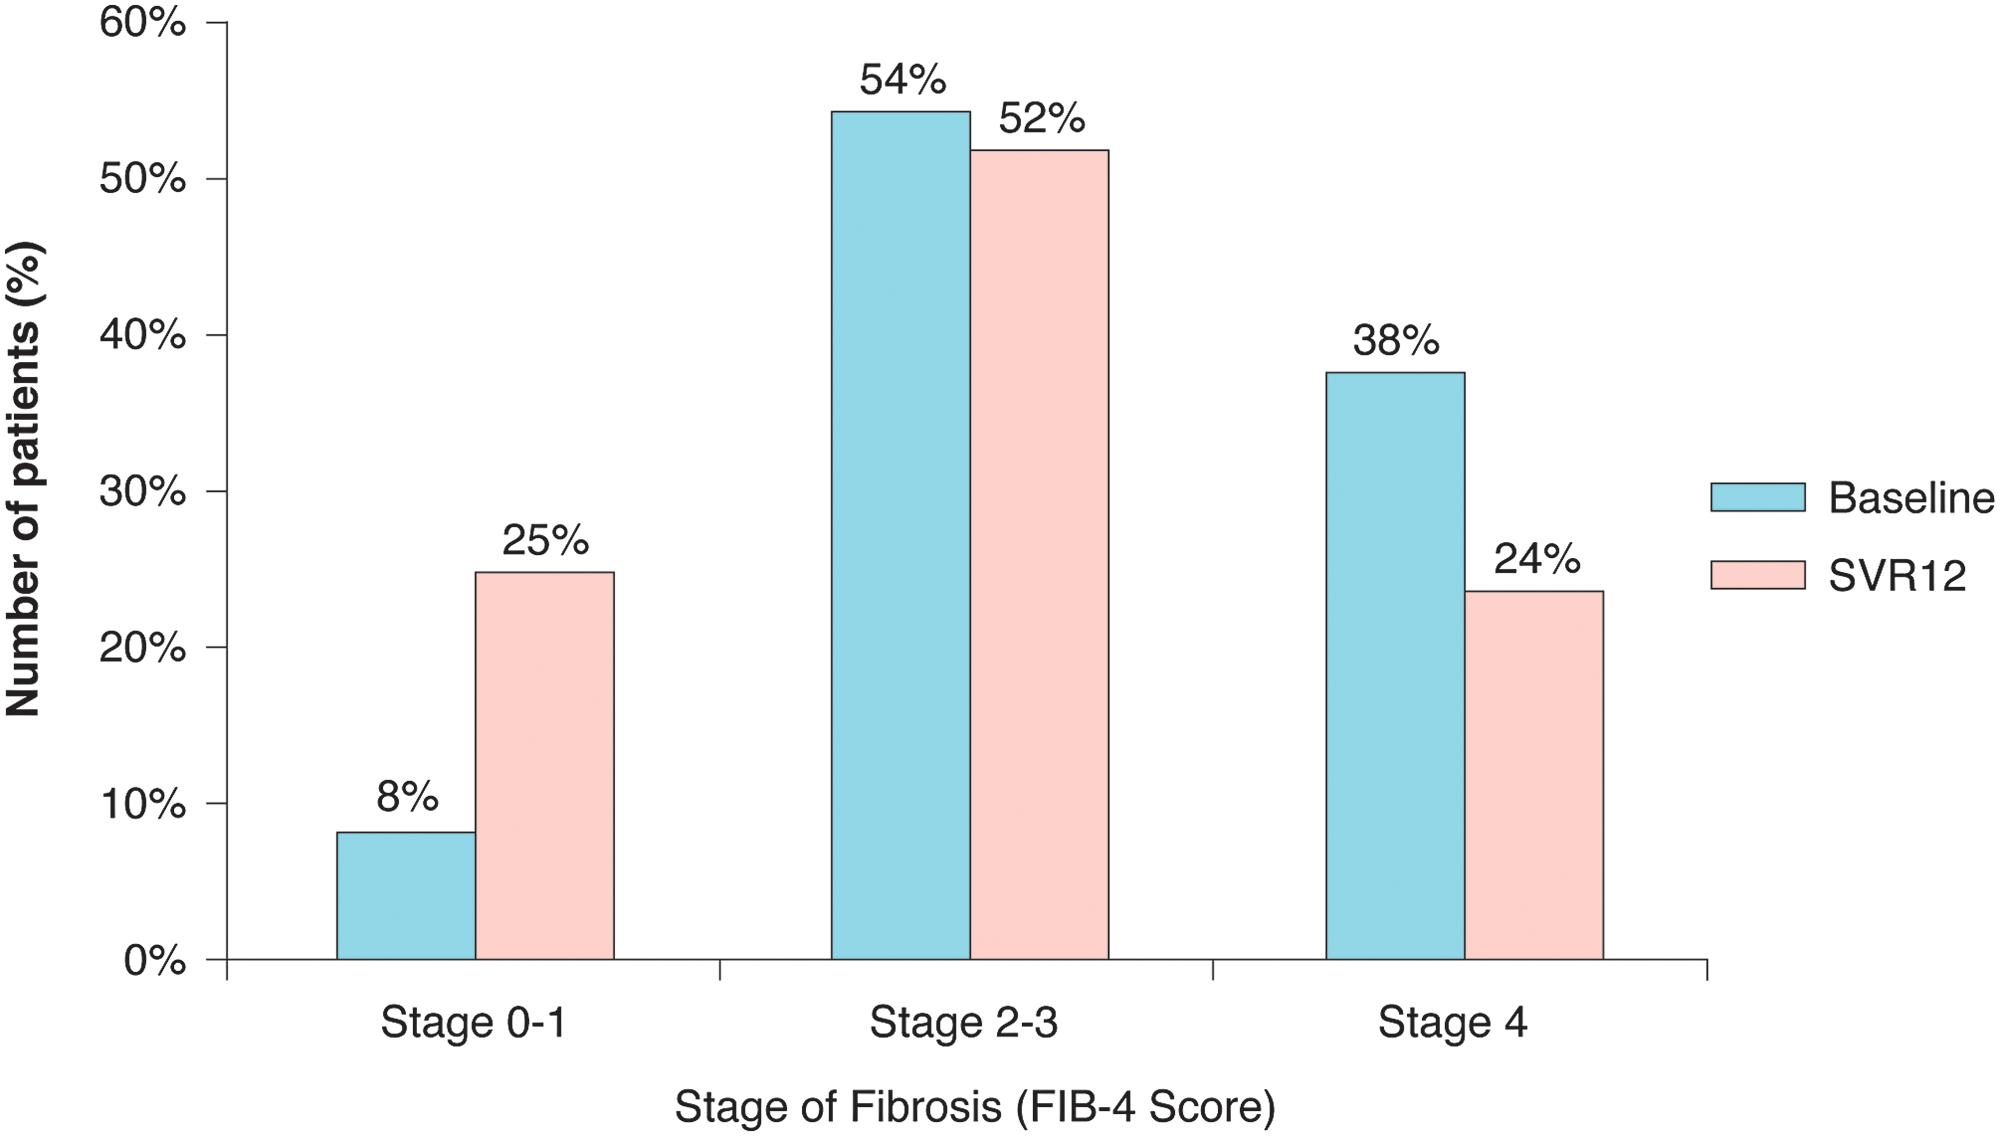 Fibrosis-4 score at baseline and SVR12.